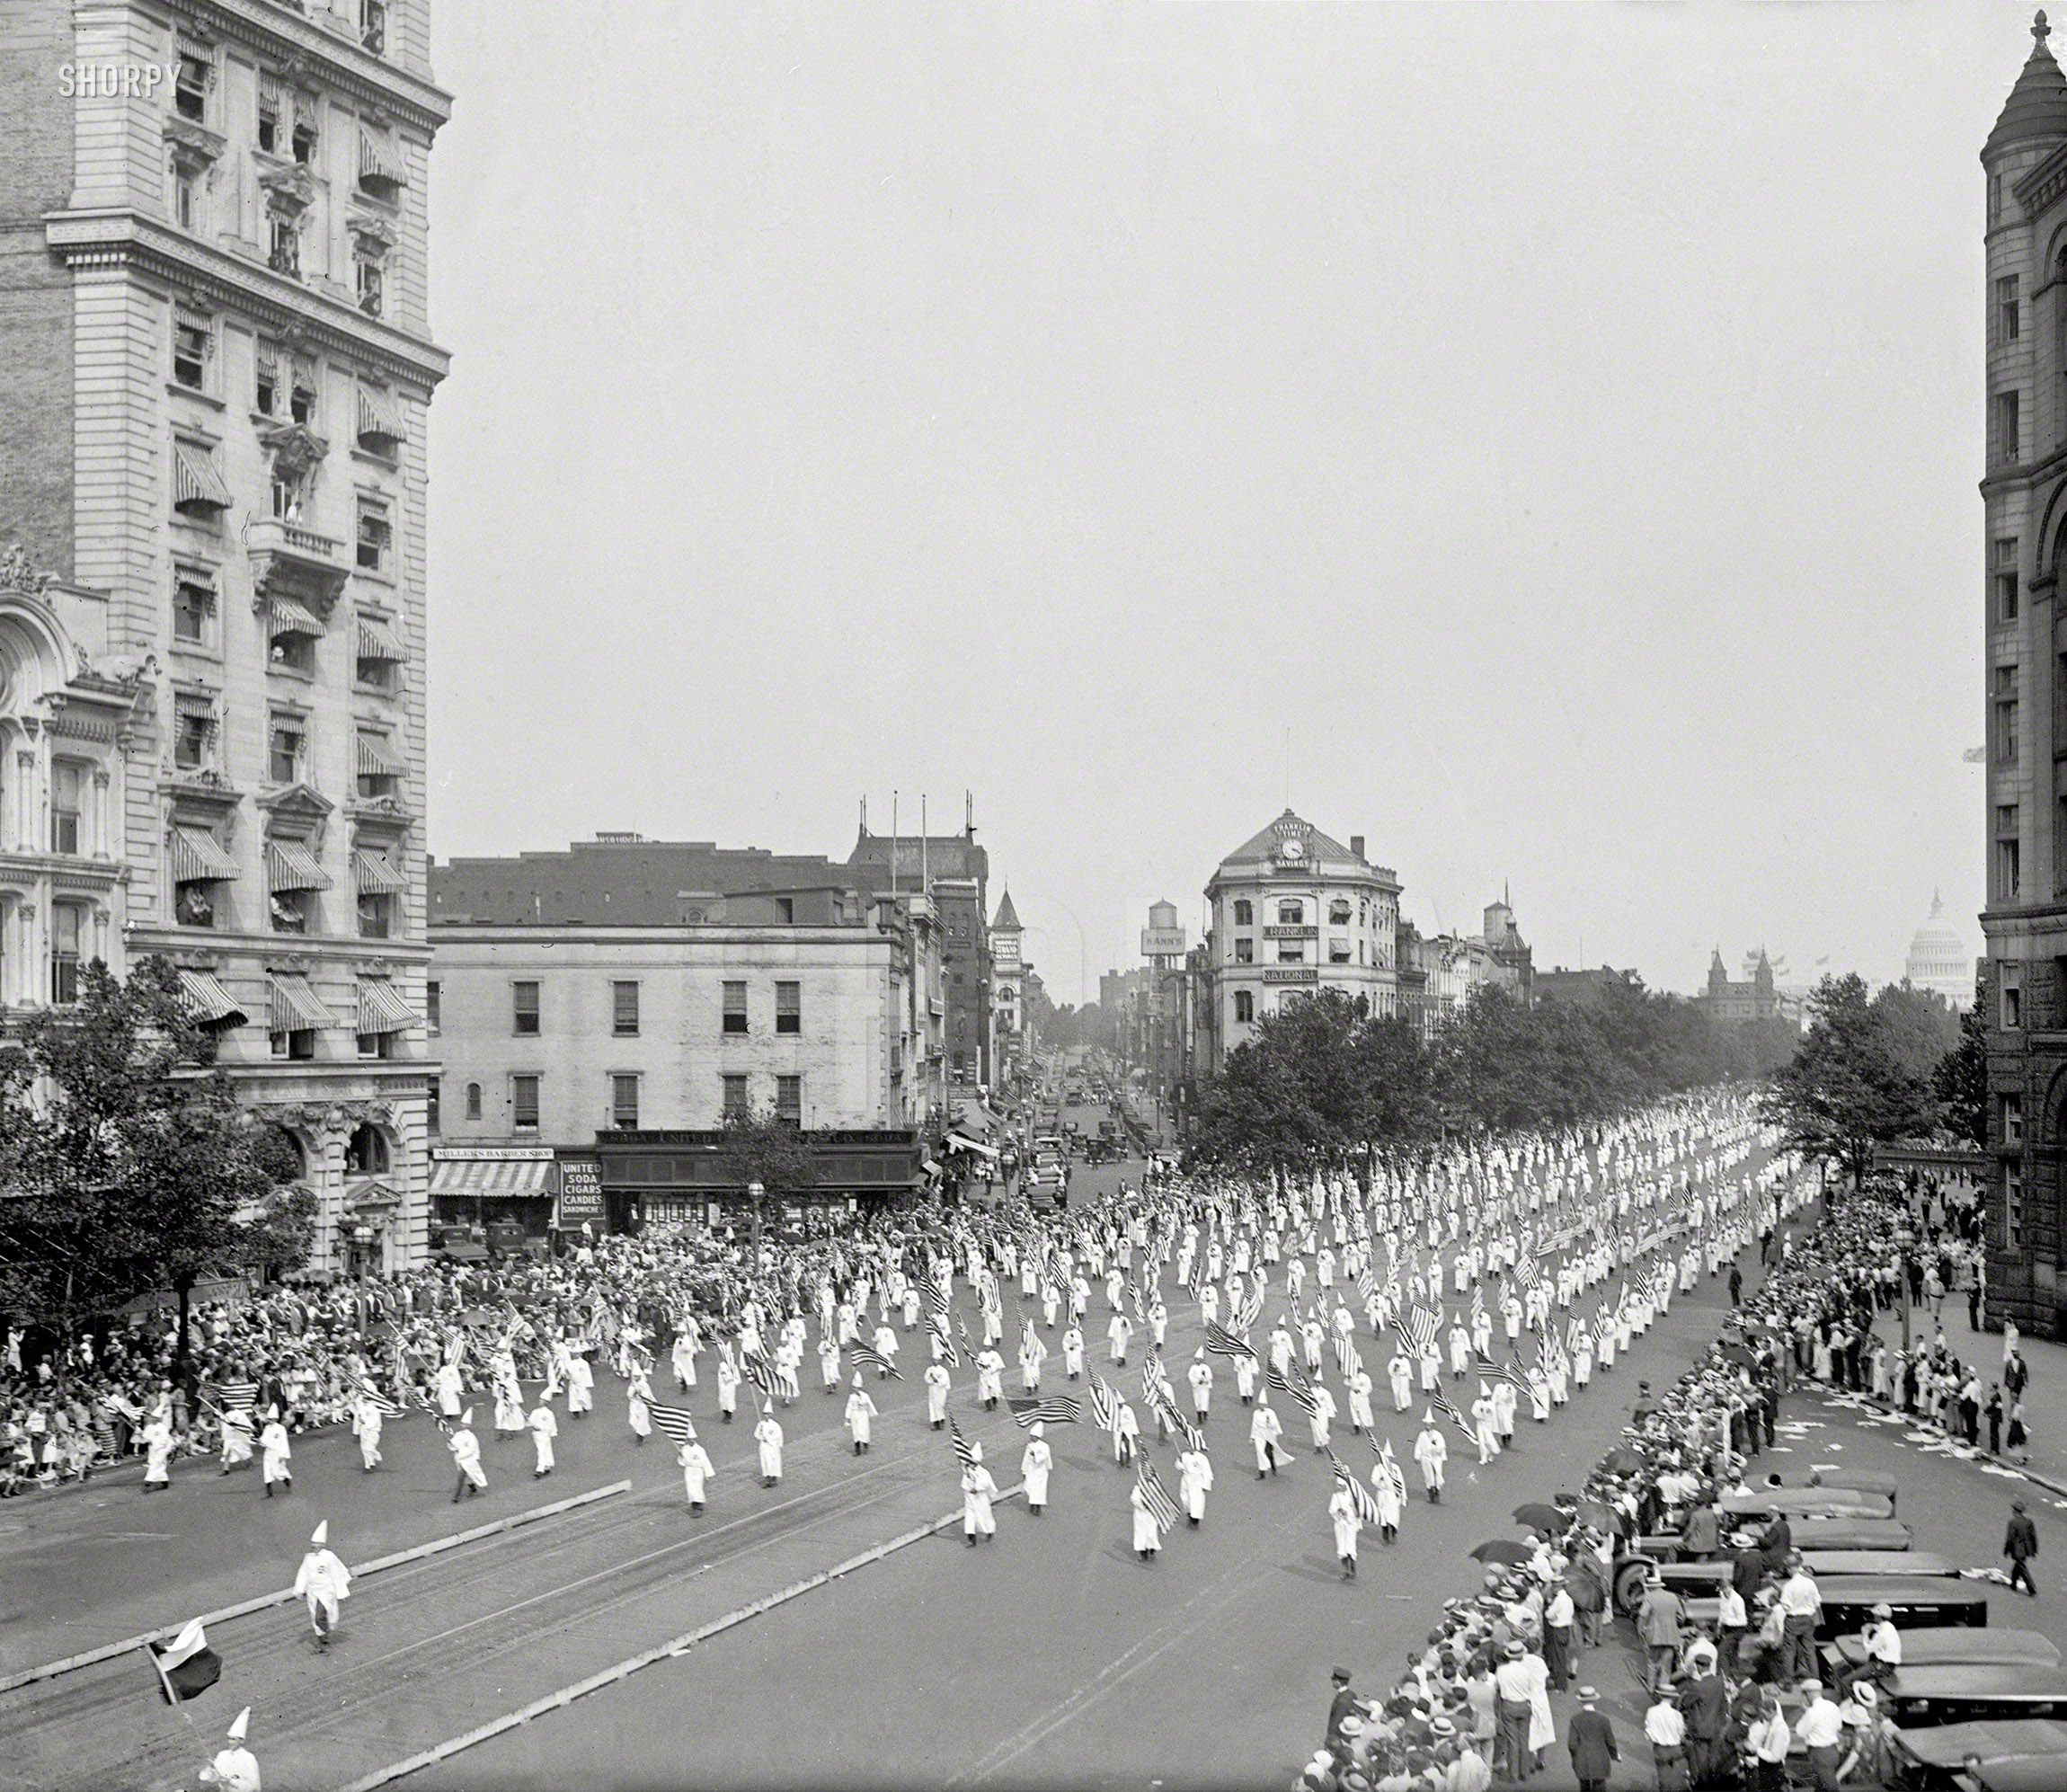 Washington, D.C. "K.K.K. parade on Pennsylvania Avenue, 8/8/25." National Photo Company Collection glass negative. View full size.